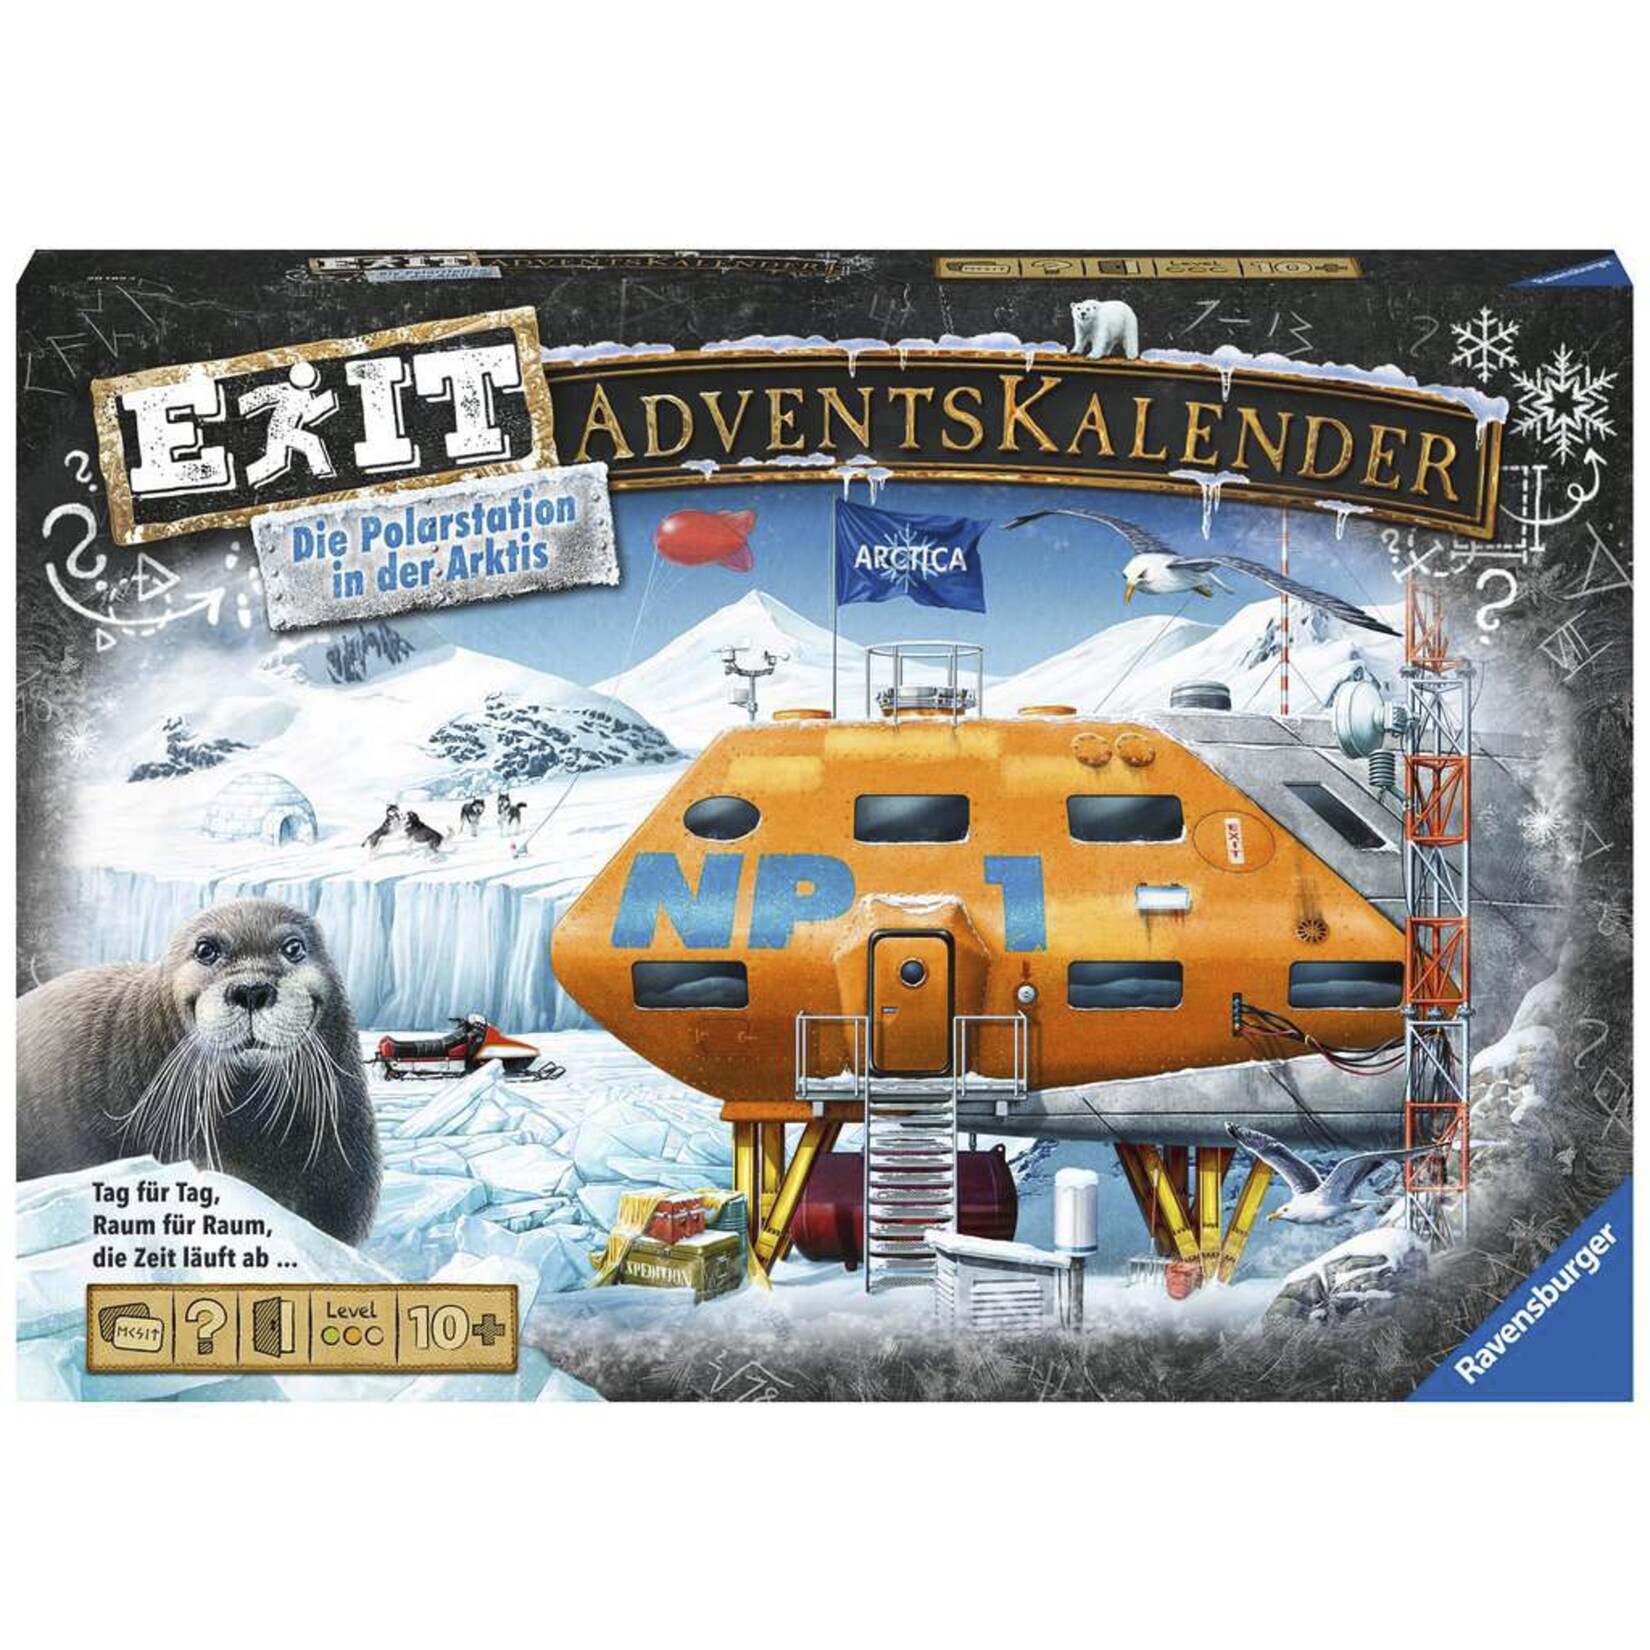 Ravensburger Rätselspiel Exit Adventskalender Polarstation